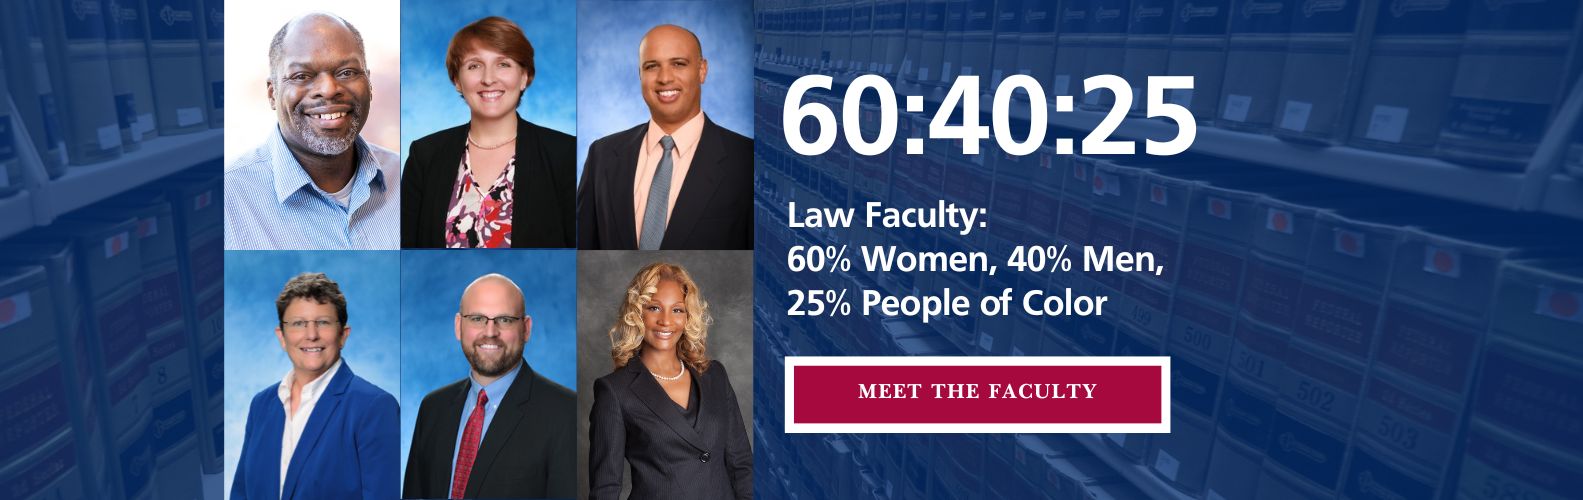 Law faculty: 60% women, 40% men, 25% people of color